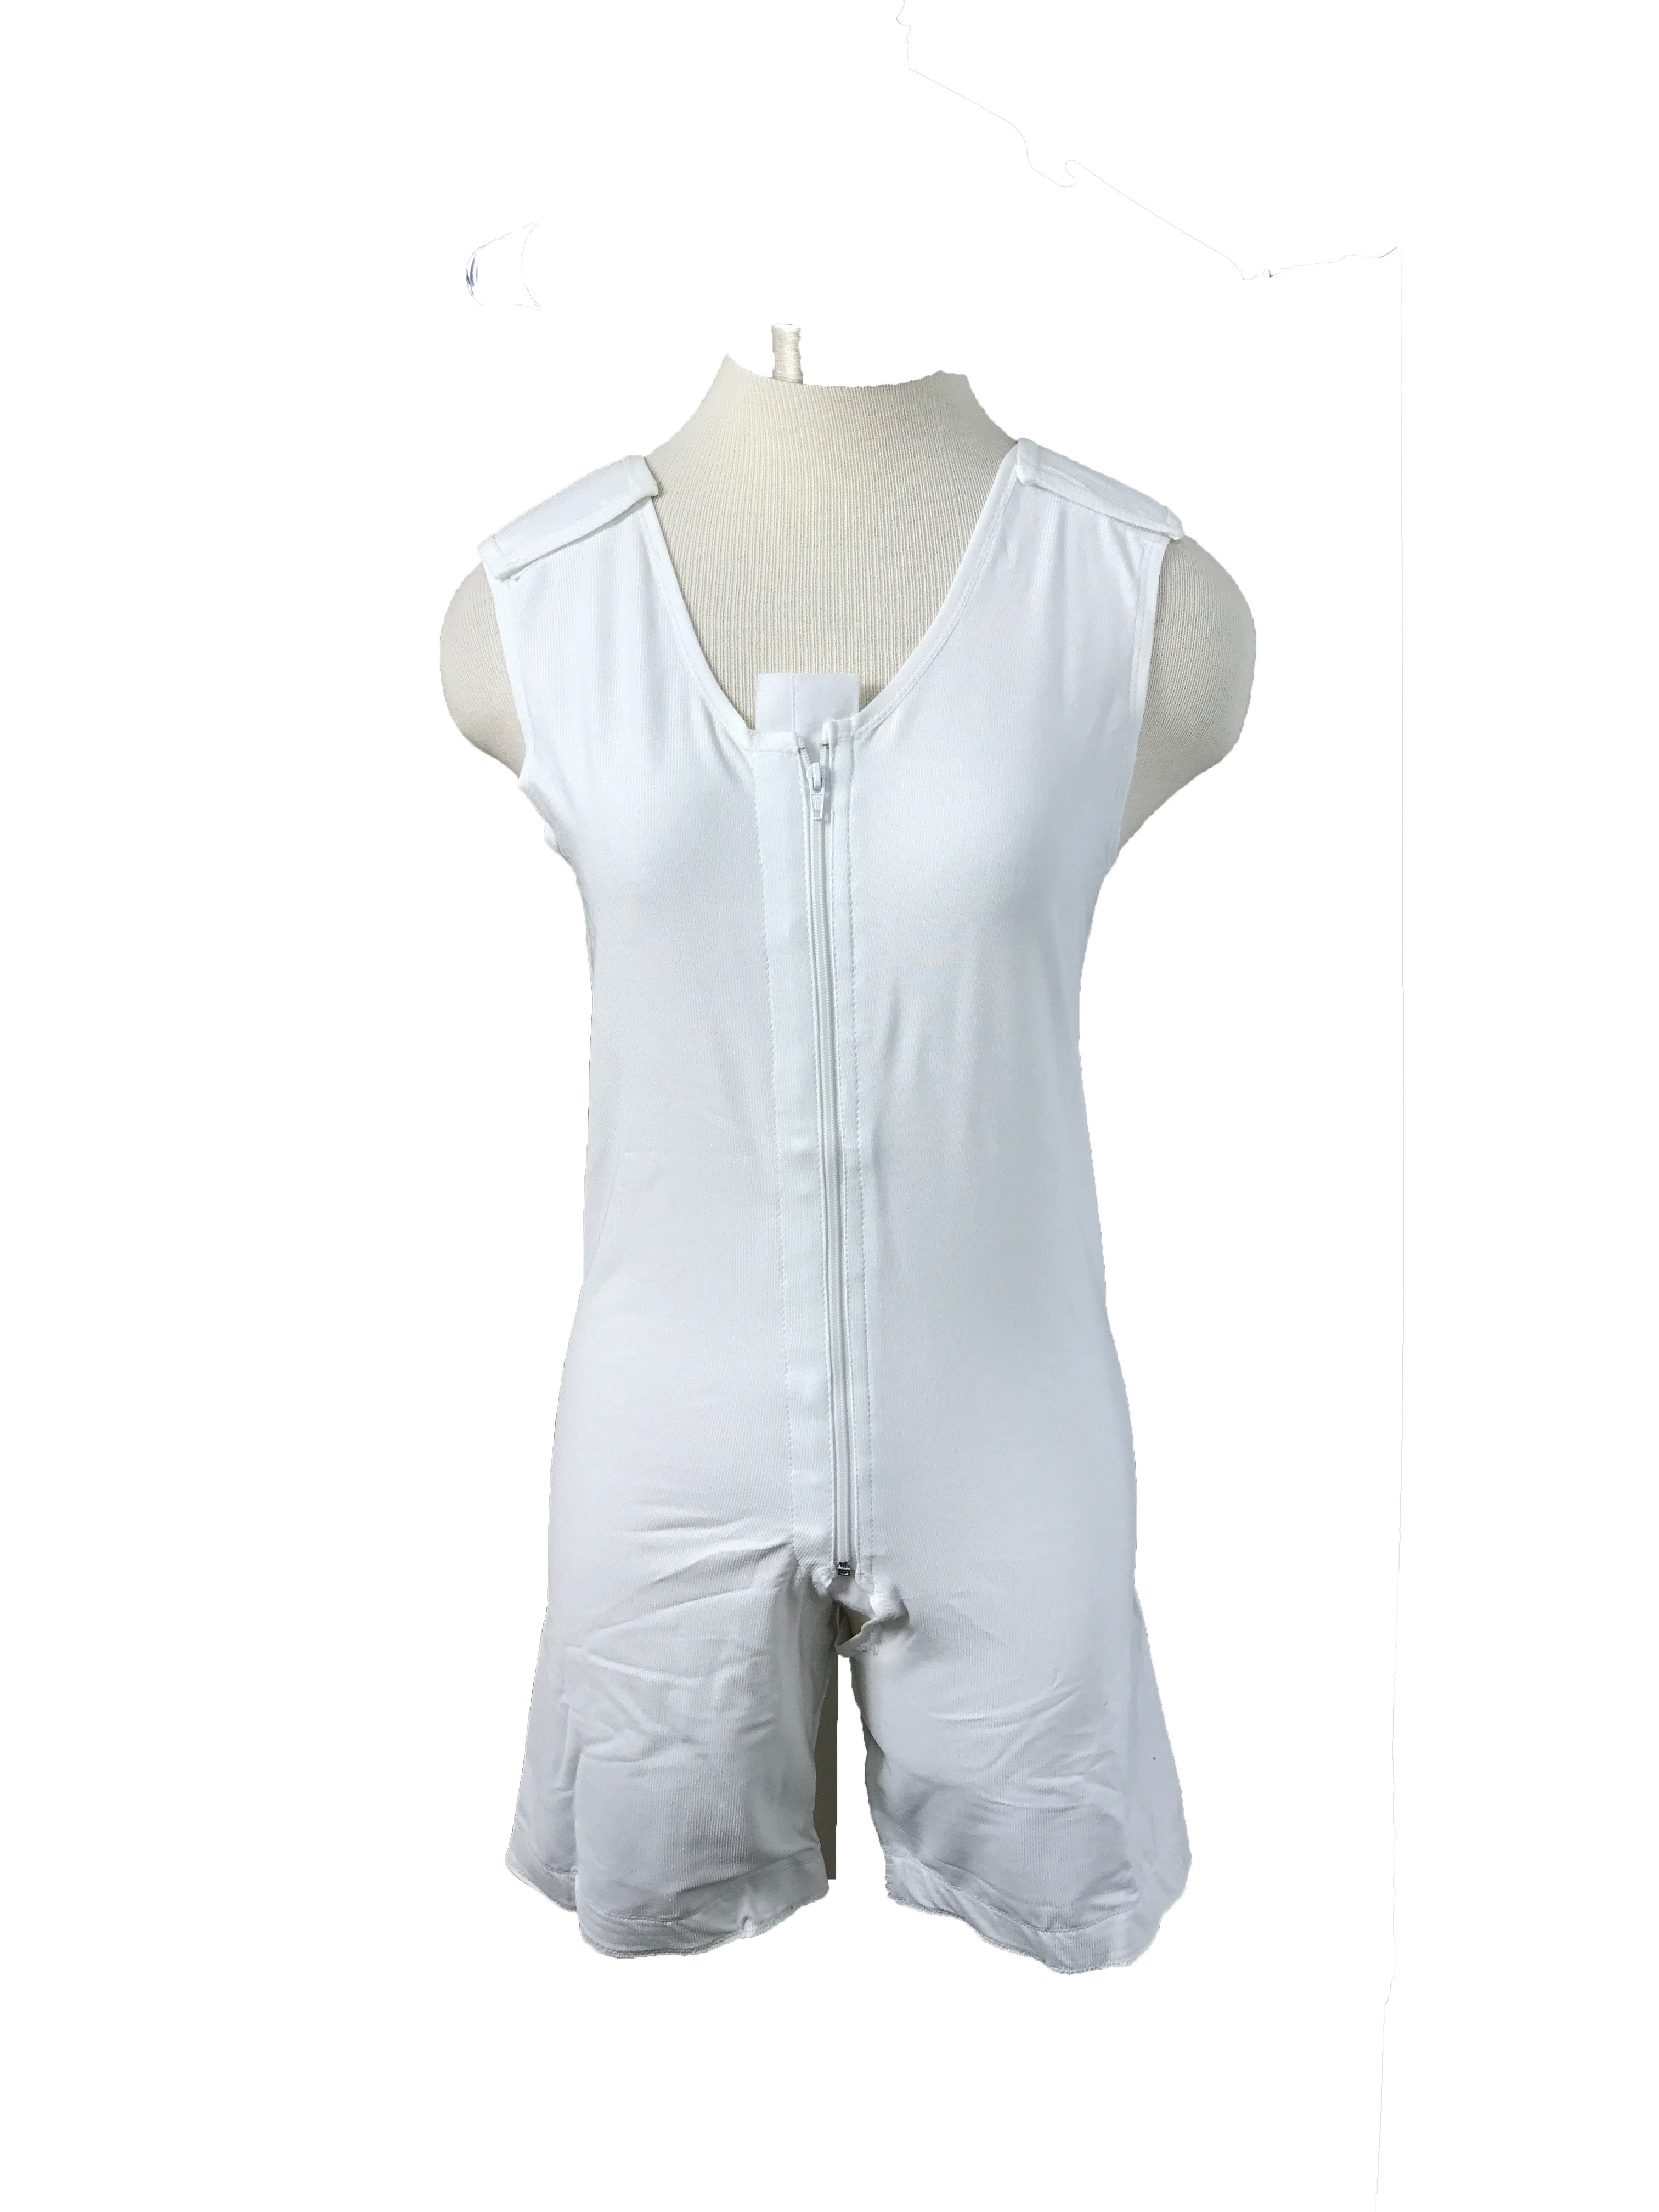 Marena ComfortWear Compression and Support Garment White Bodysuit Men's Size 4XL